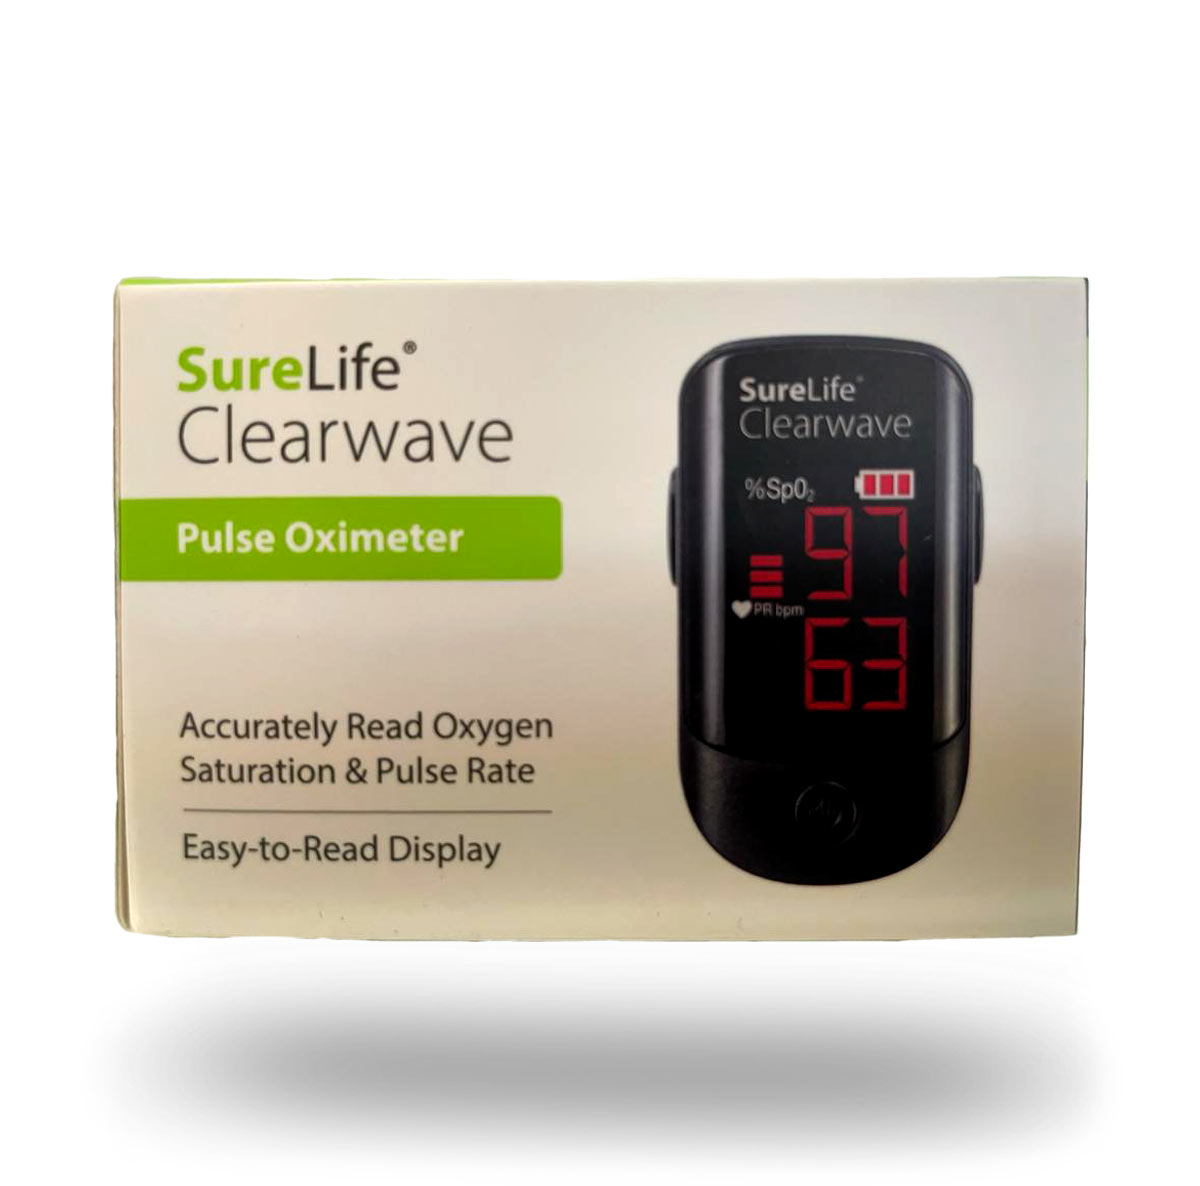 SureLife ClearWave Pulse Oximeter